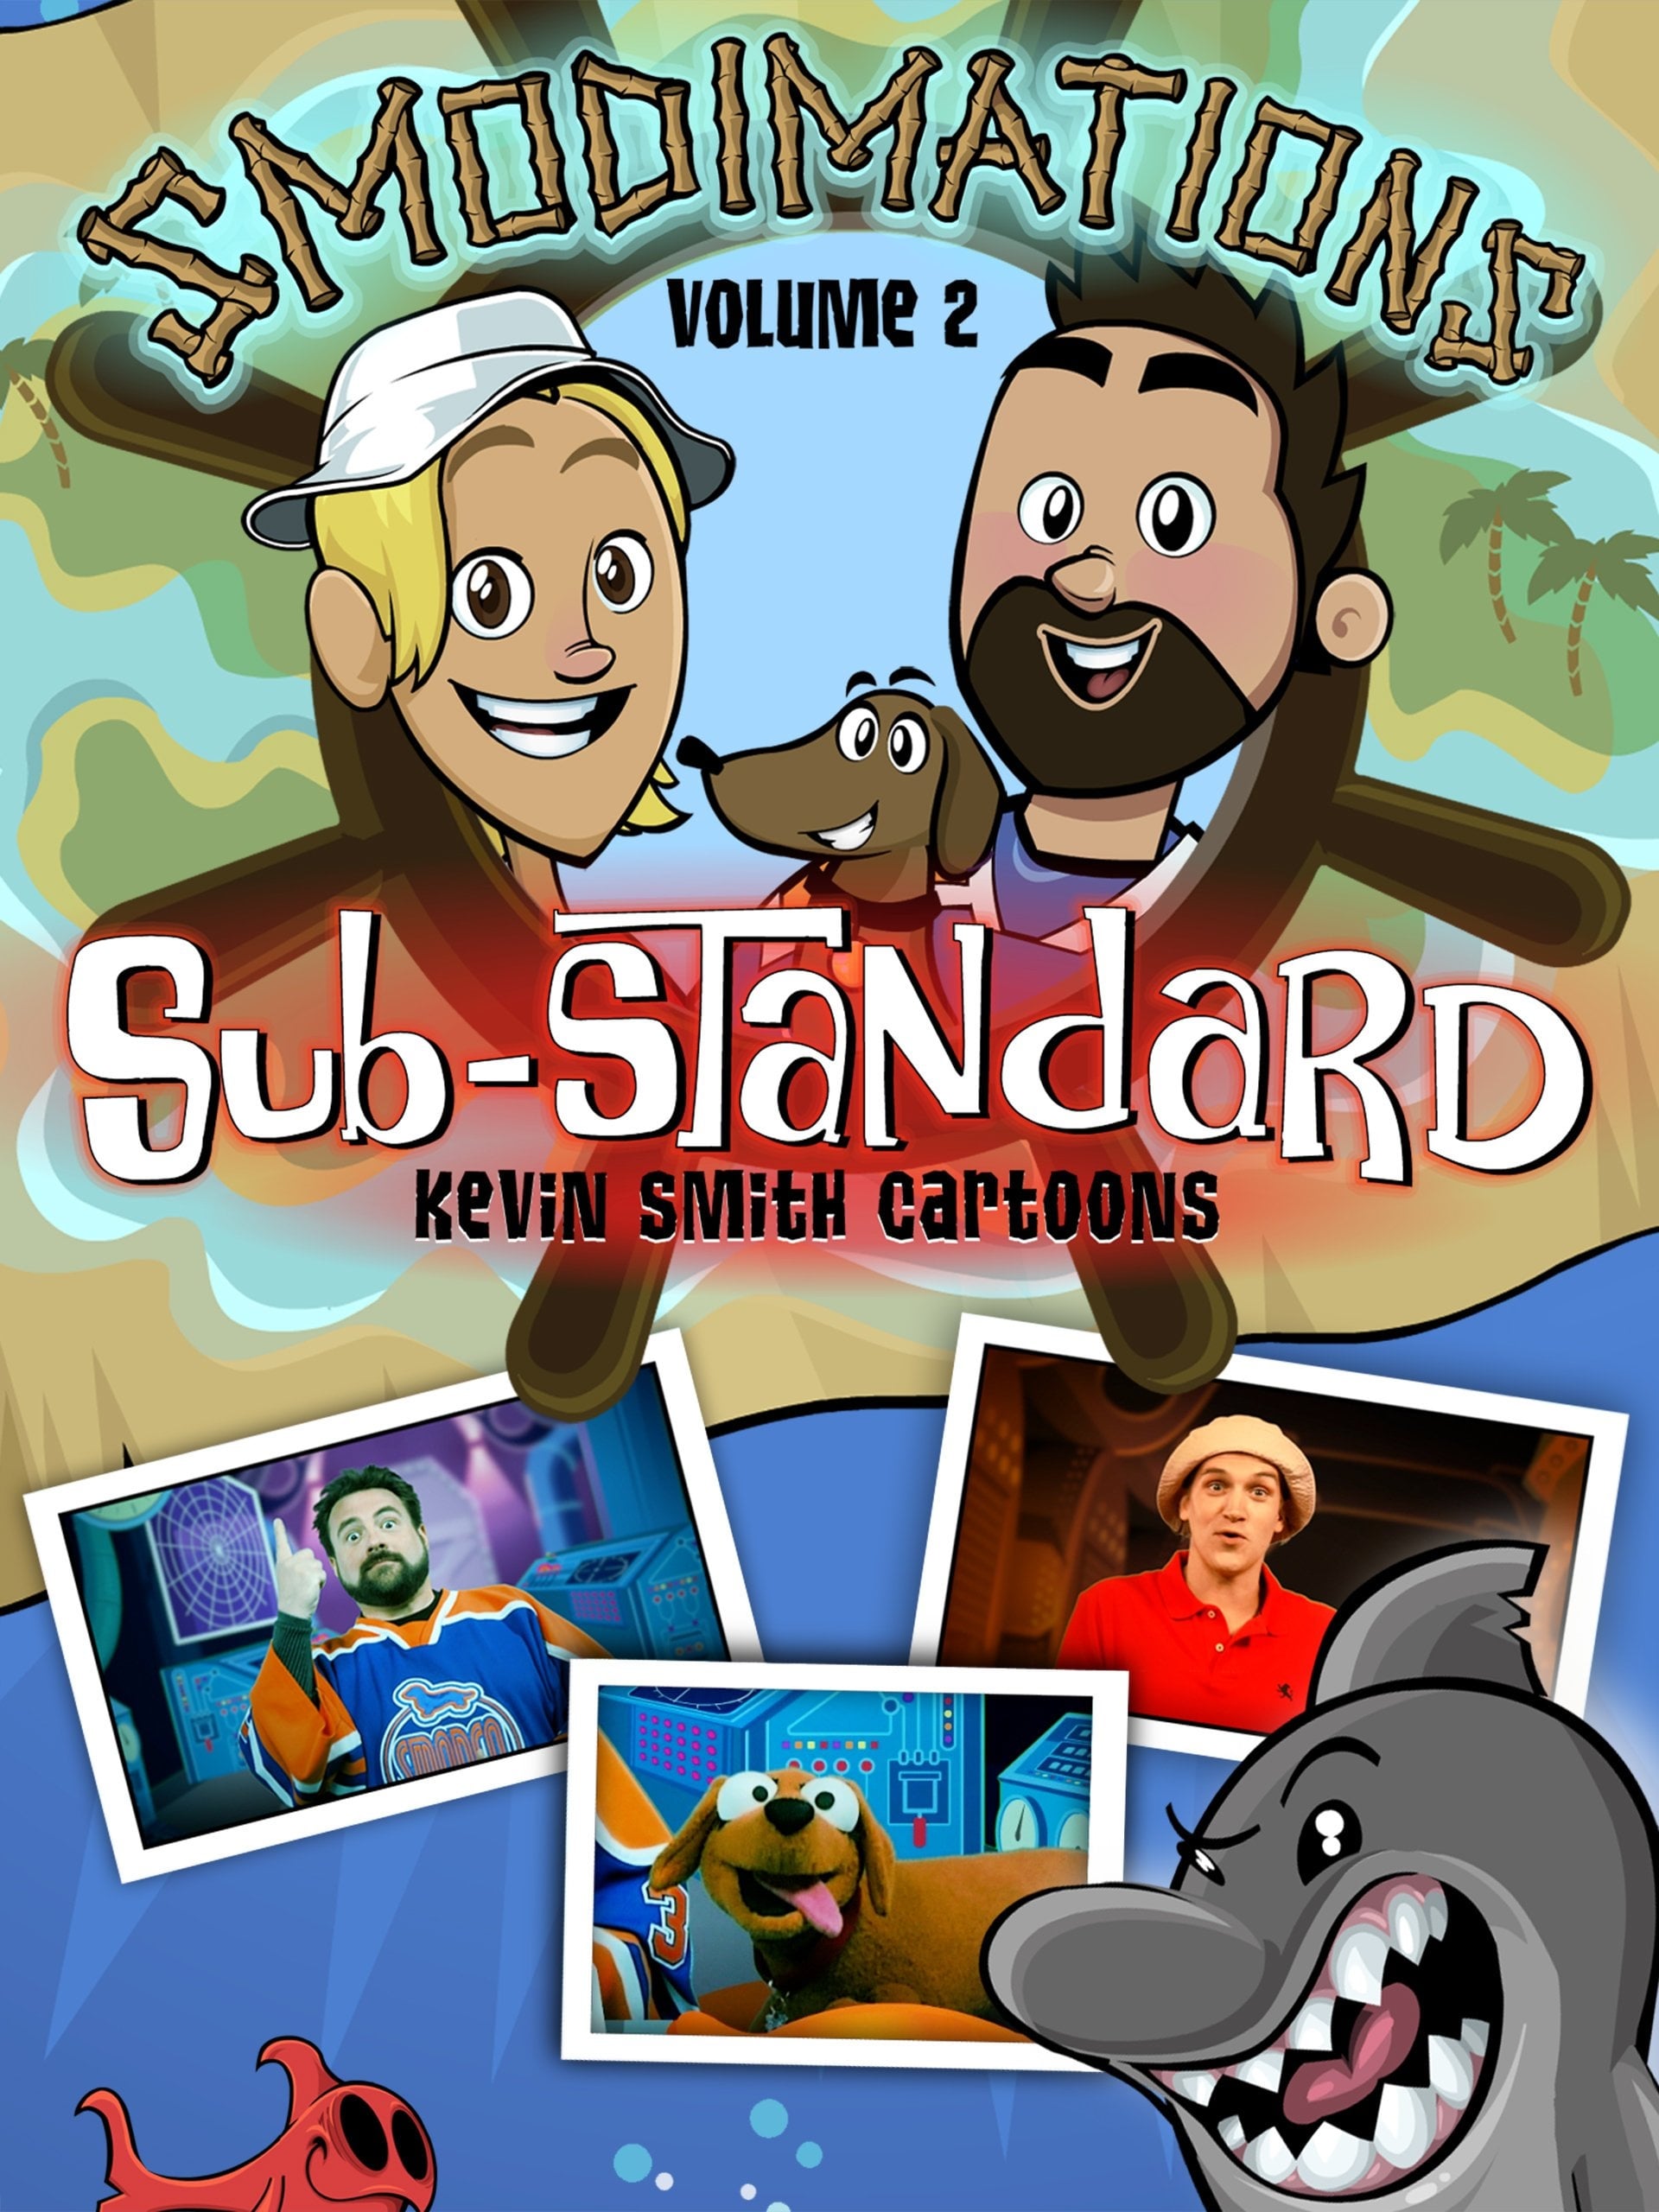 Smodimations Volume 2: Sub-Standard Kevin Smith Cartoons (2013)